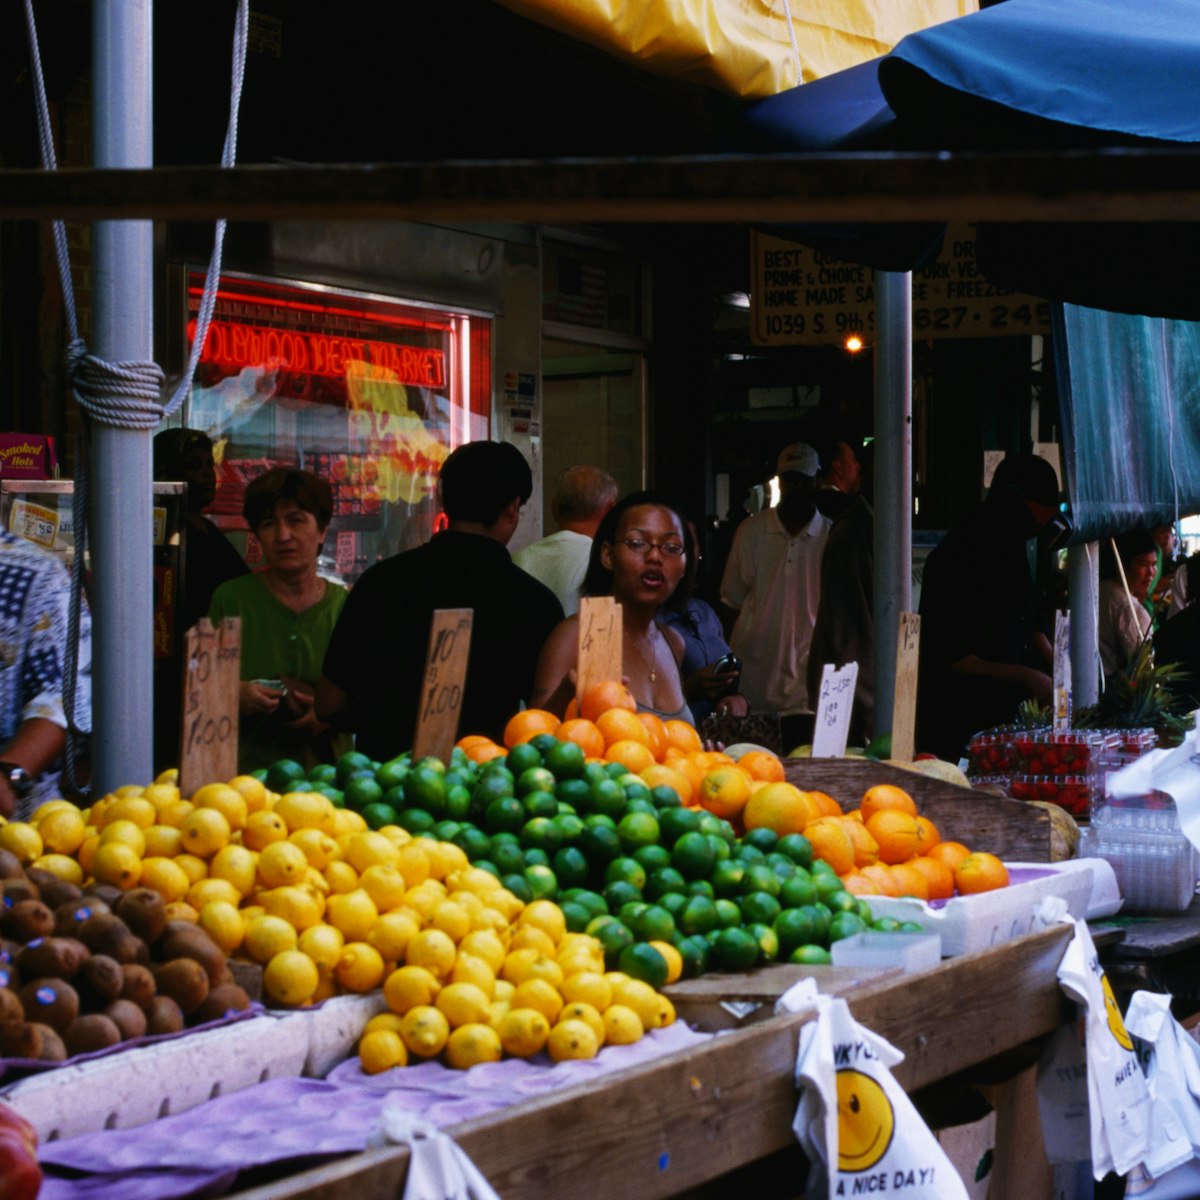 Produce vendor at Italian Market.